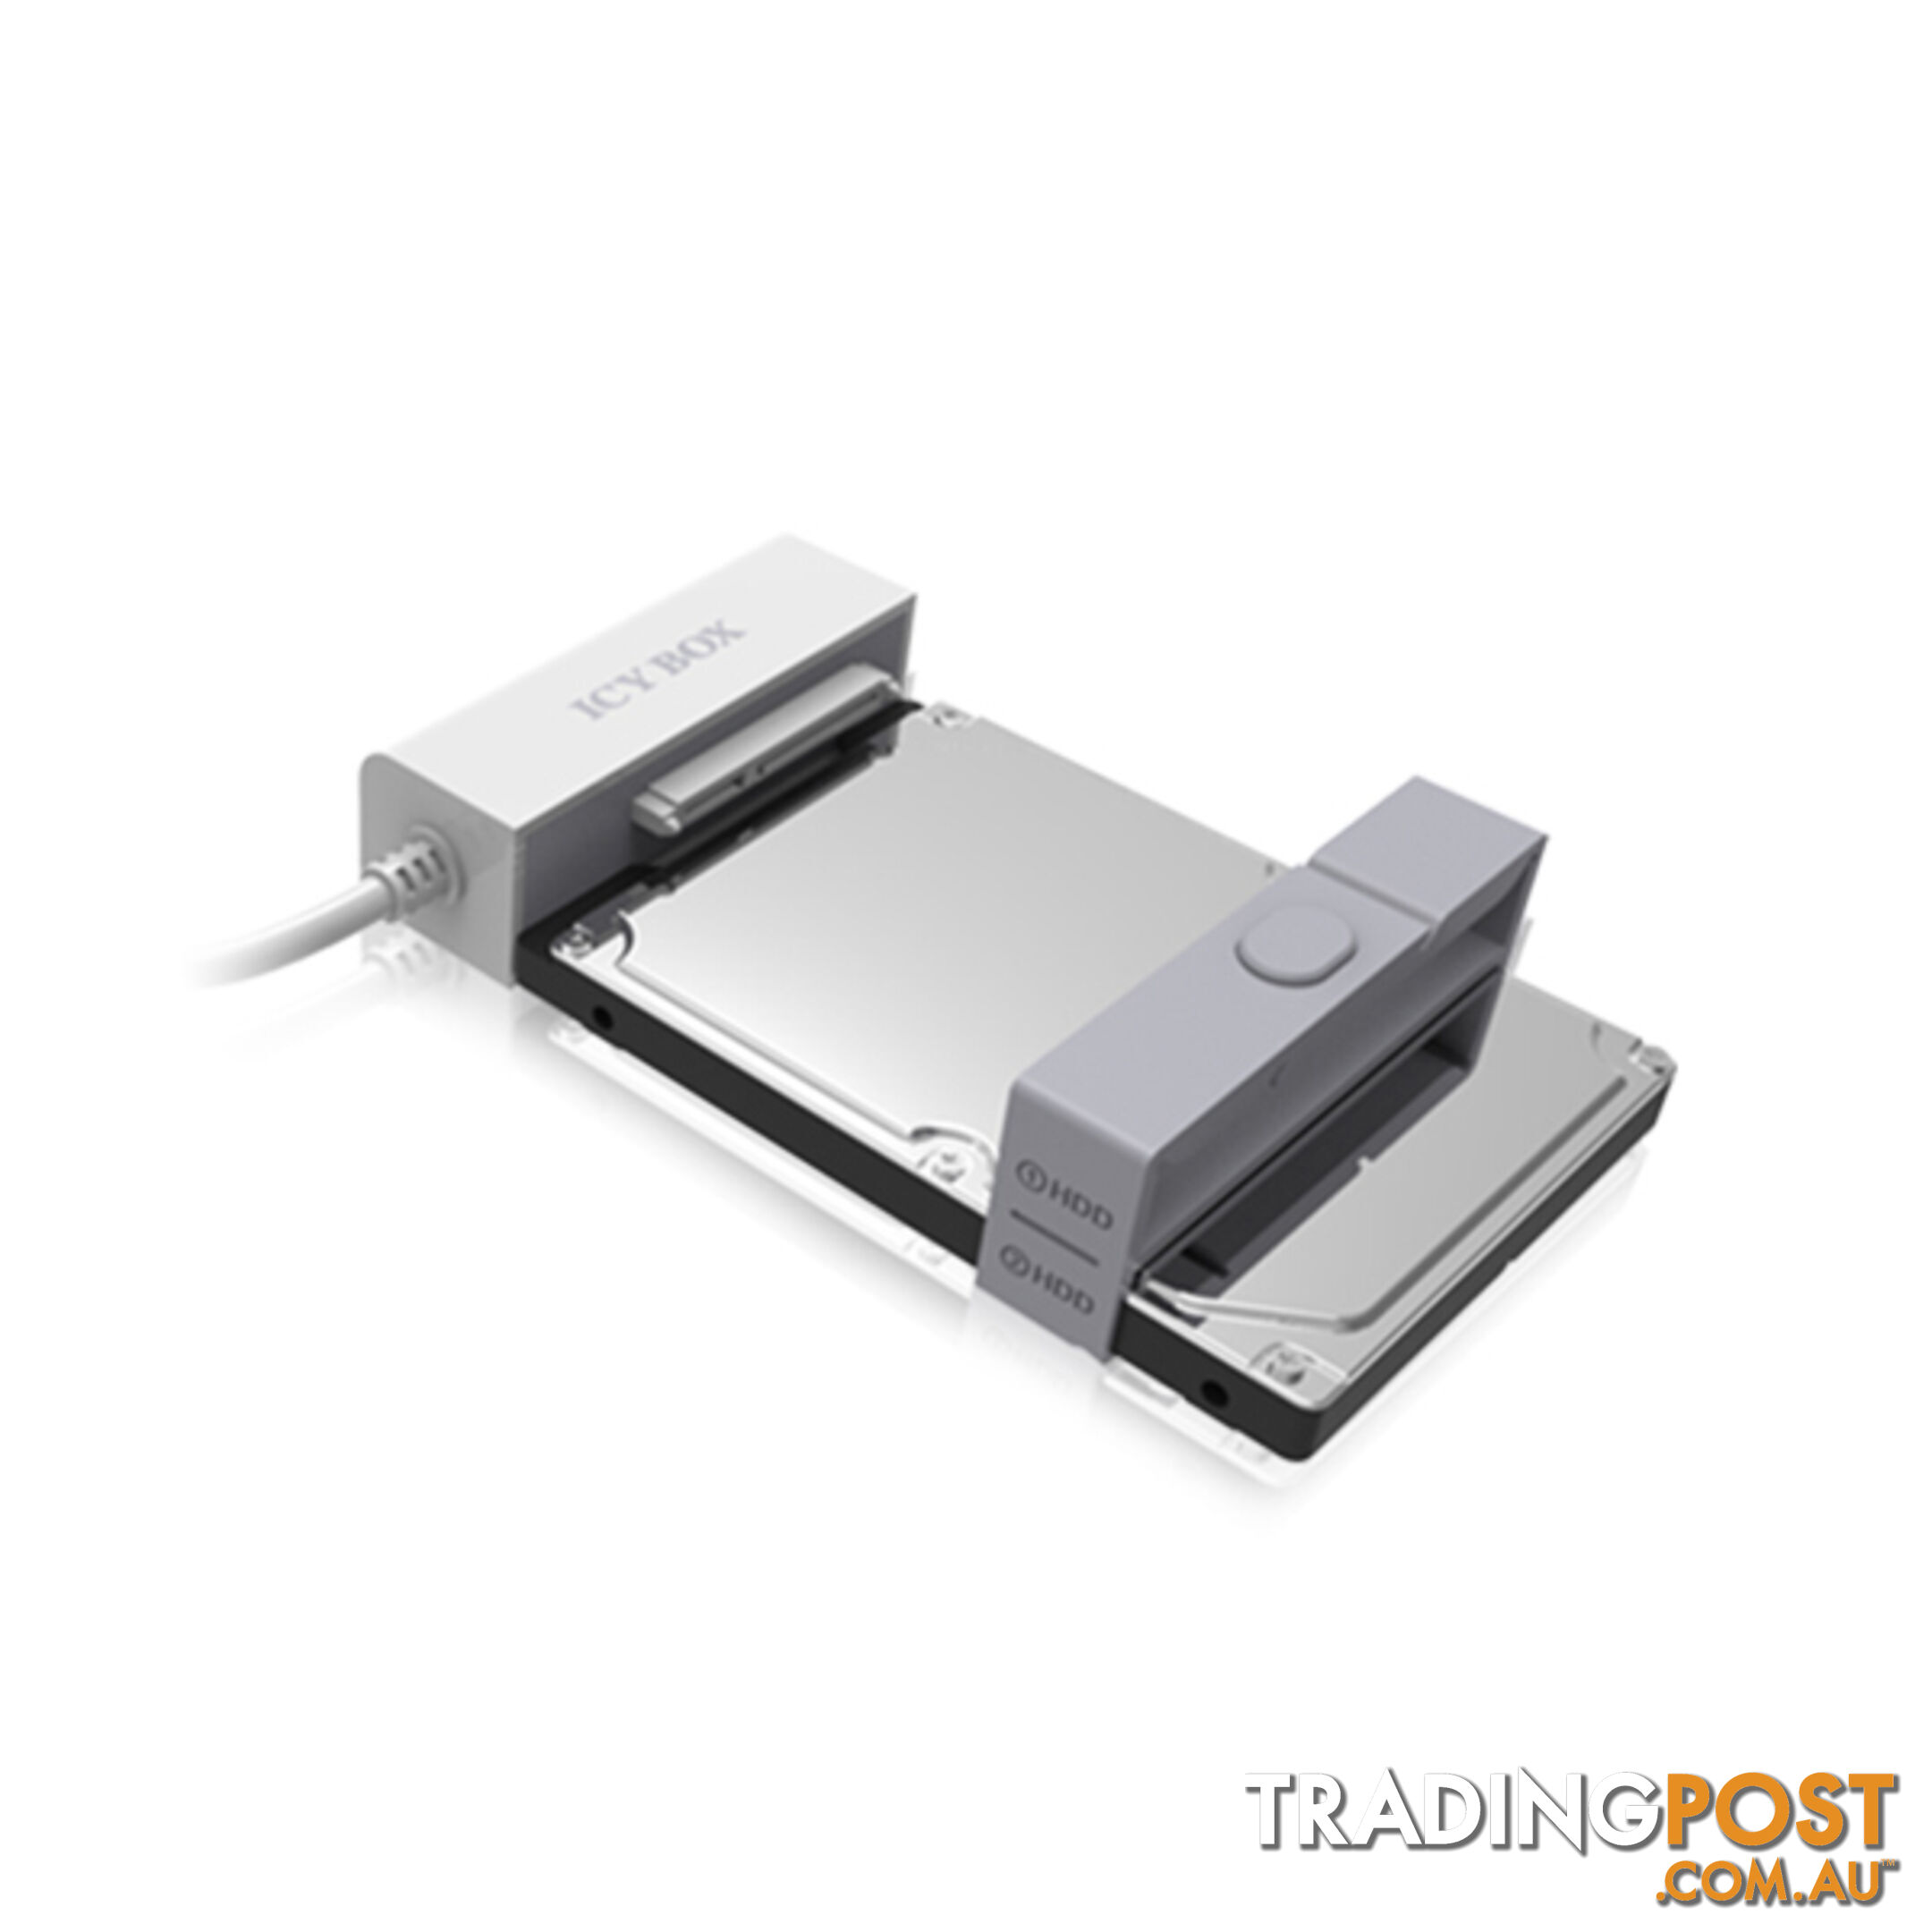 ICY BOX (IB-AC622-U3)Dual-Adapter 2.5" SATA HDD/SSD USB 3.0 Host JBOD Function